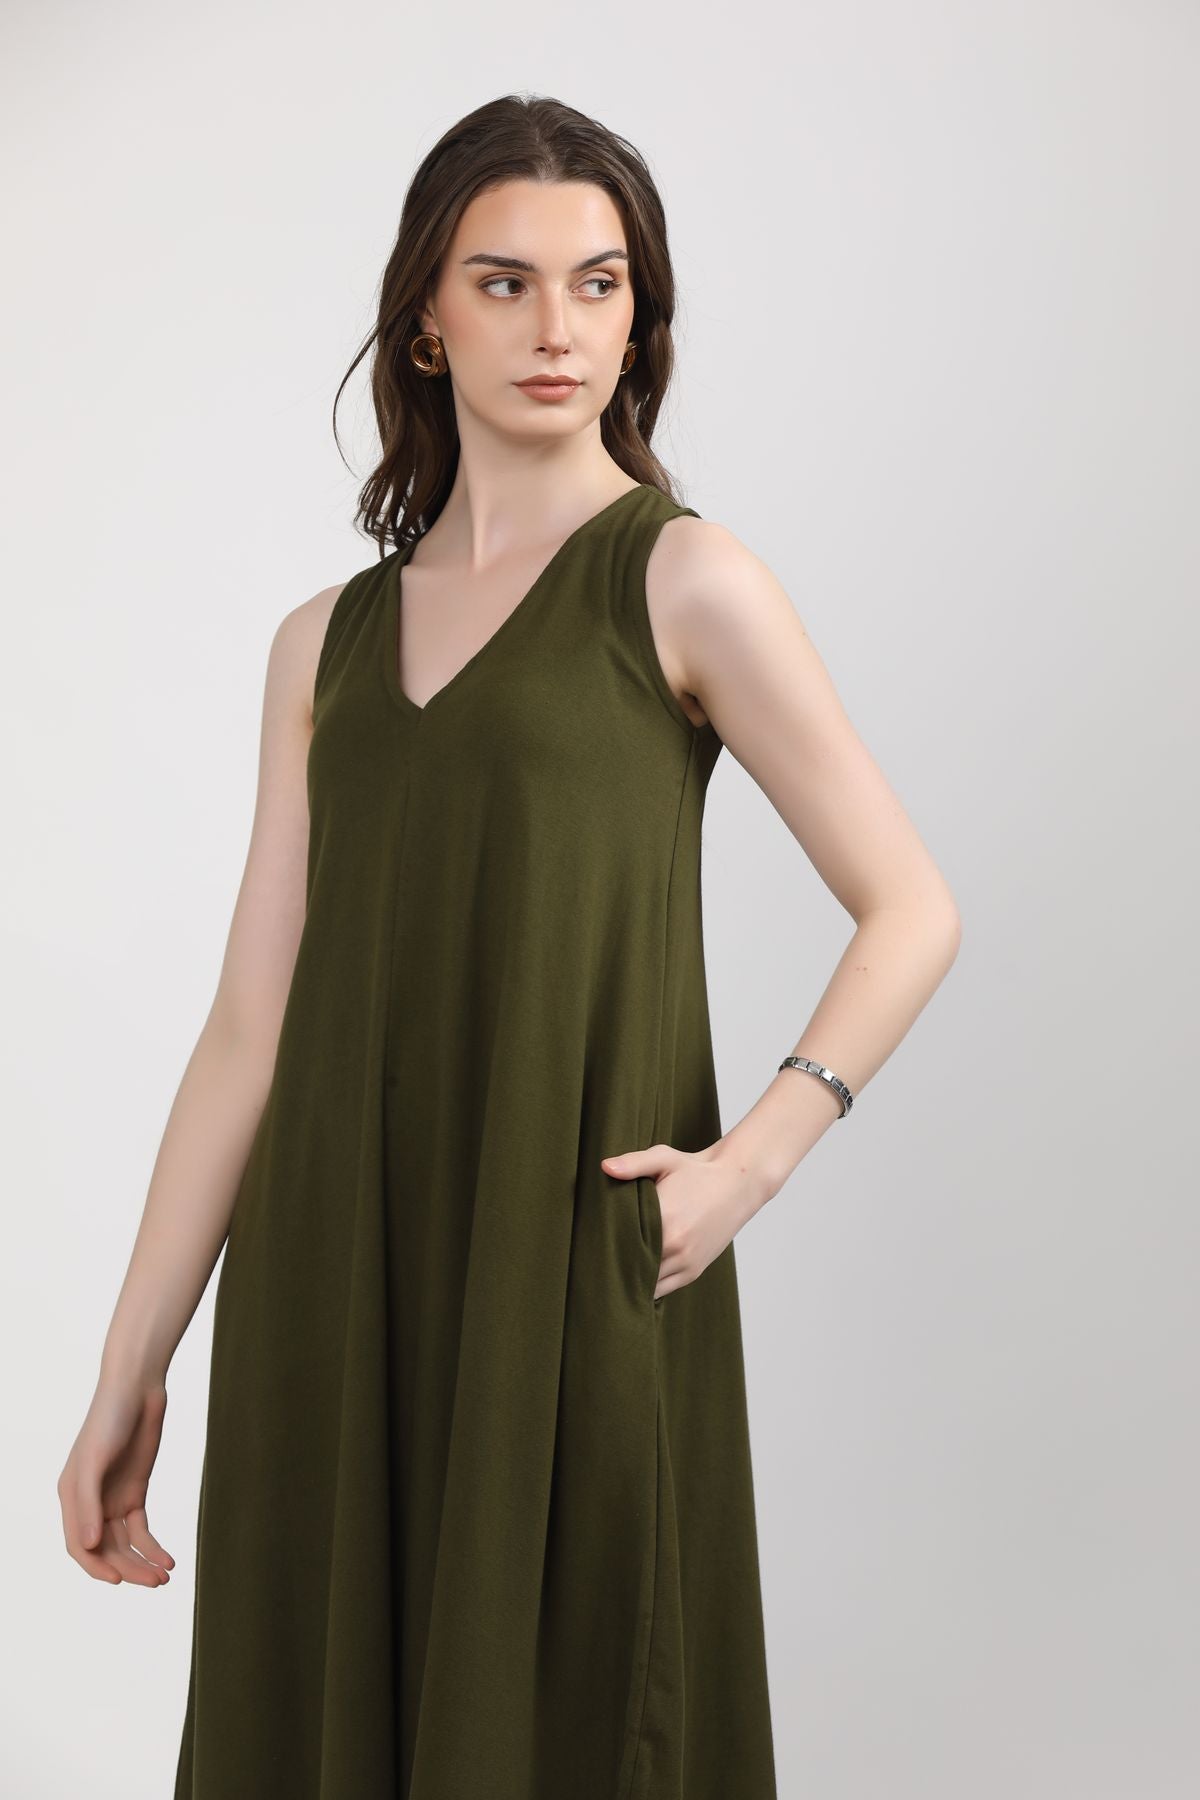 Roxane Pocket Dress - Olive Green